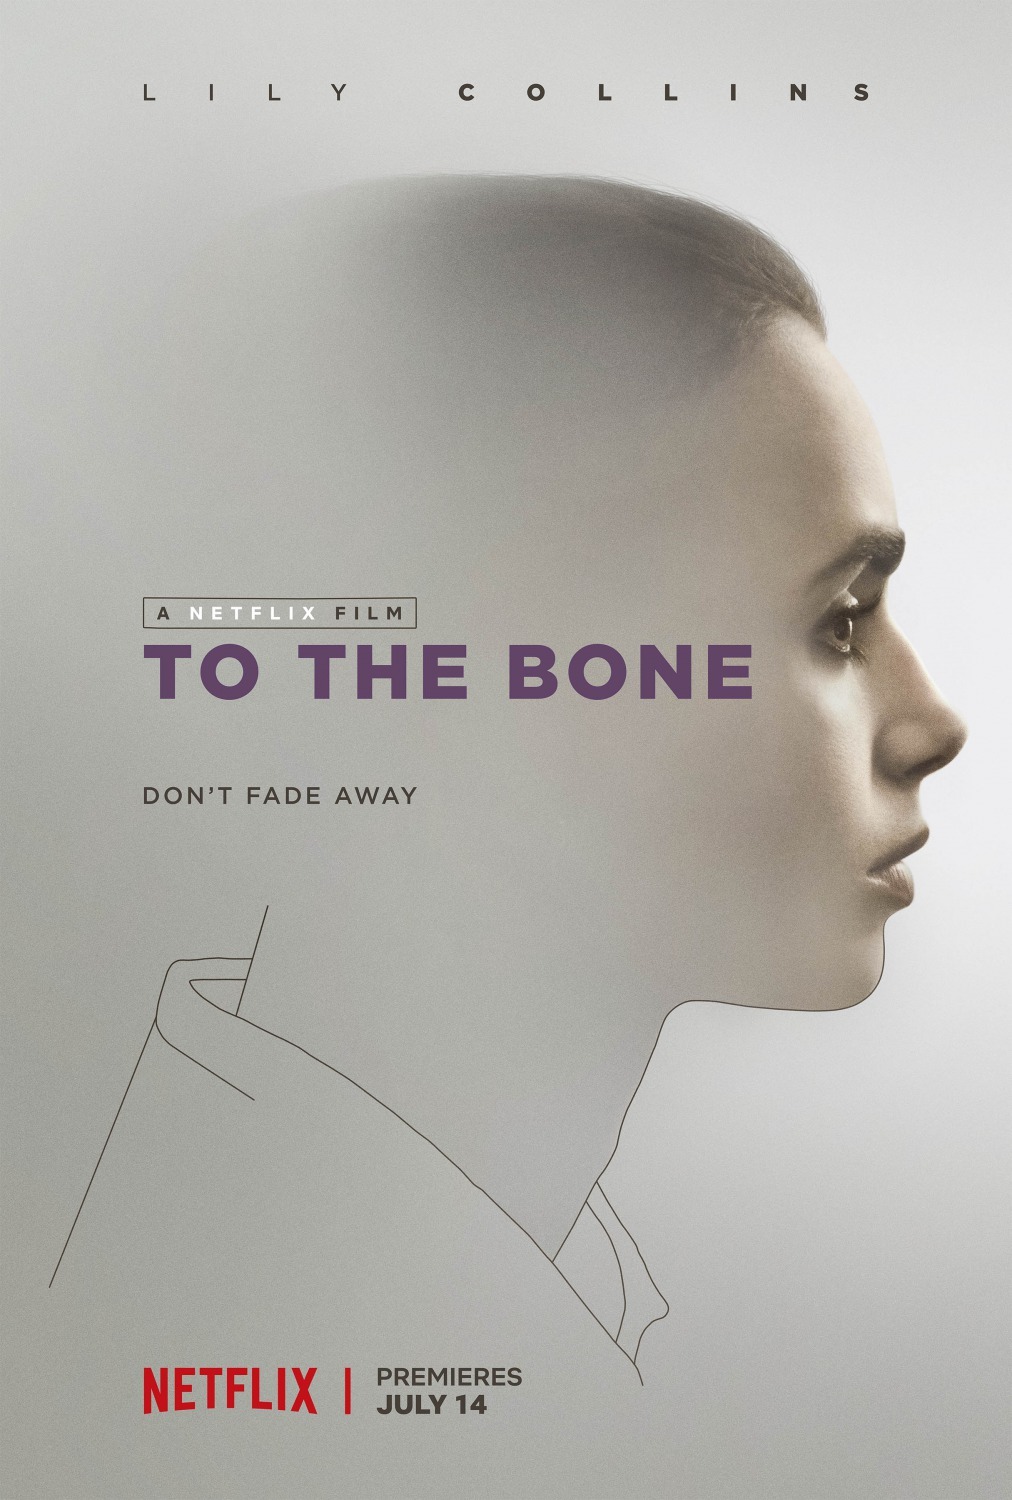 Nonton film To the Bone layarkaca21 indoxx1 ganool online streaming terbaru